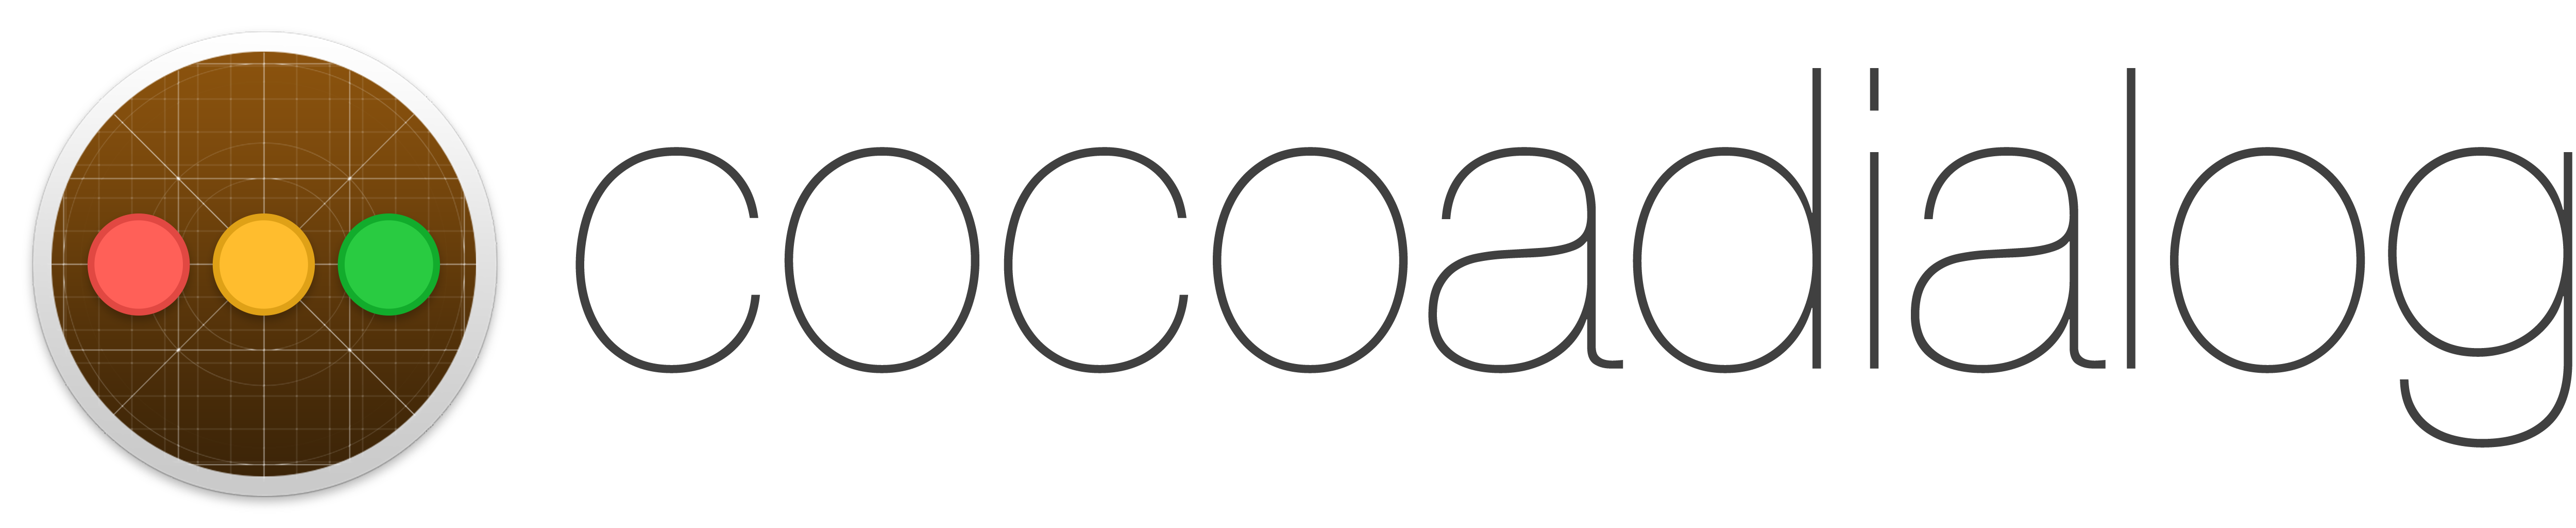 cocoadialog logo